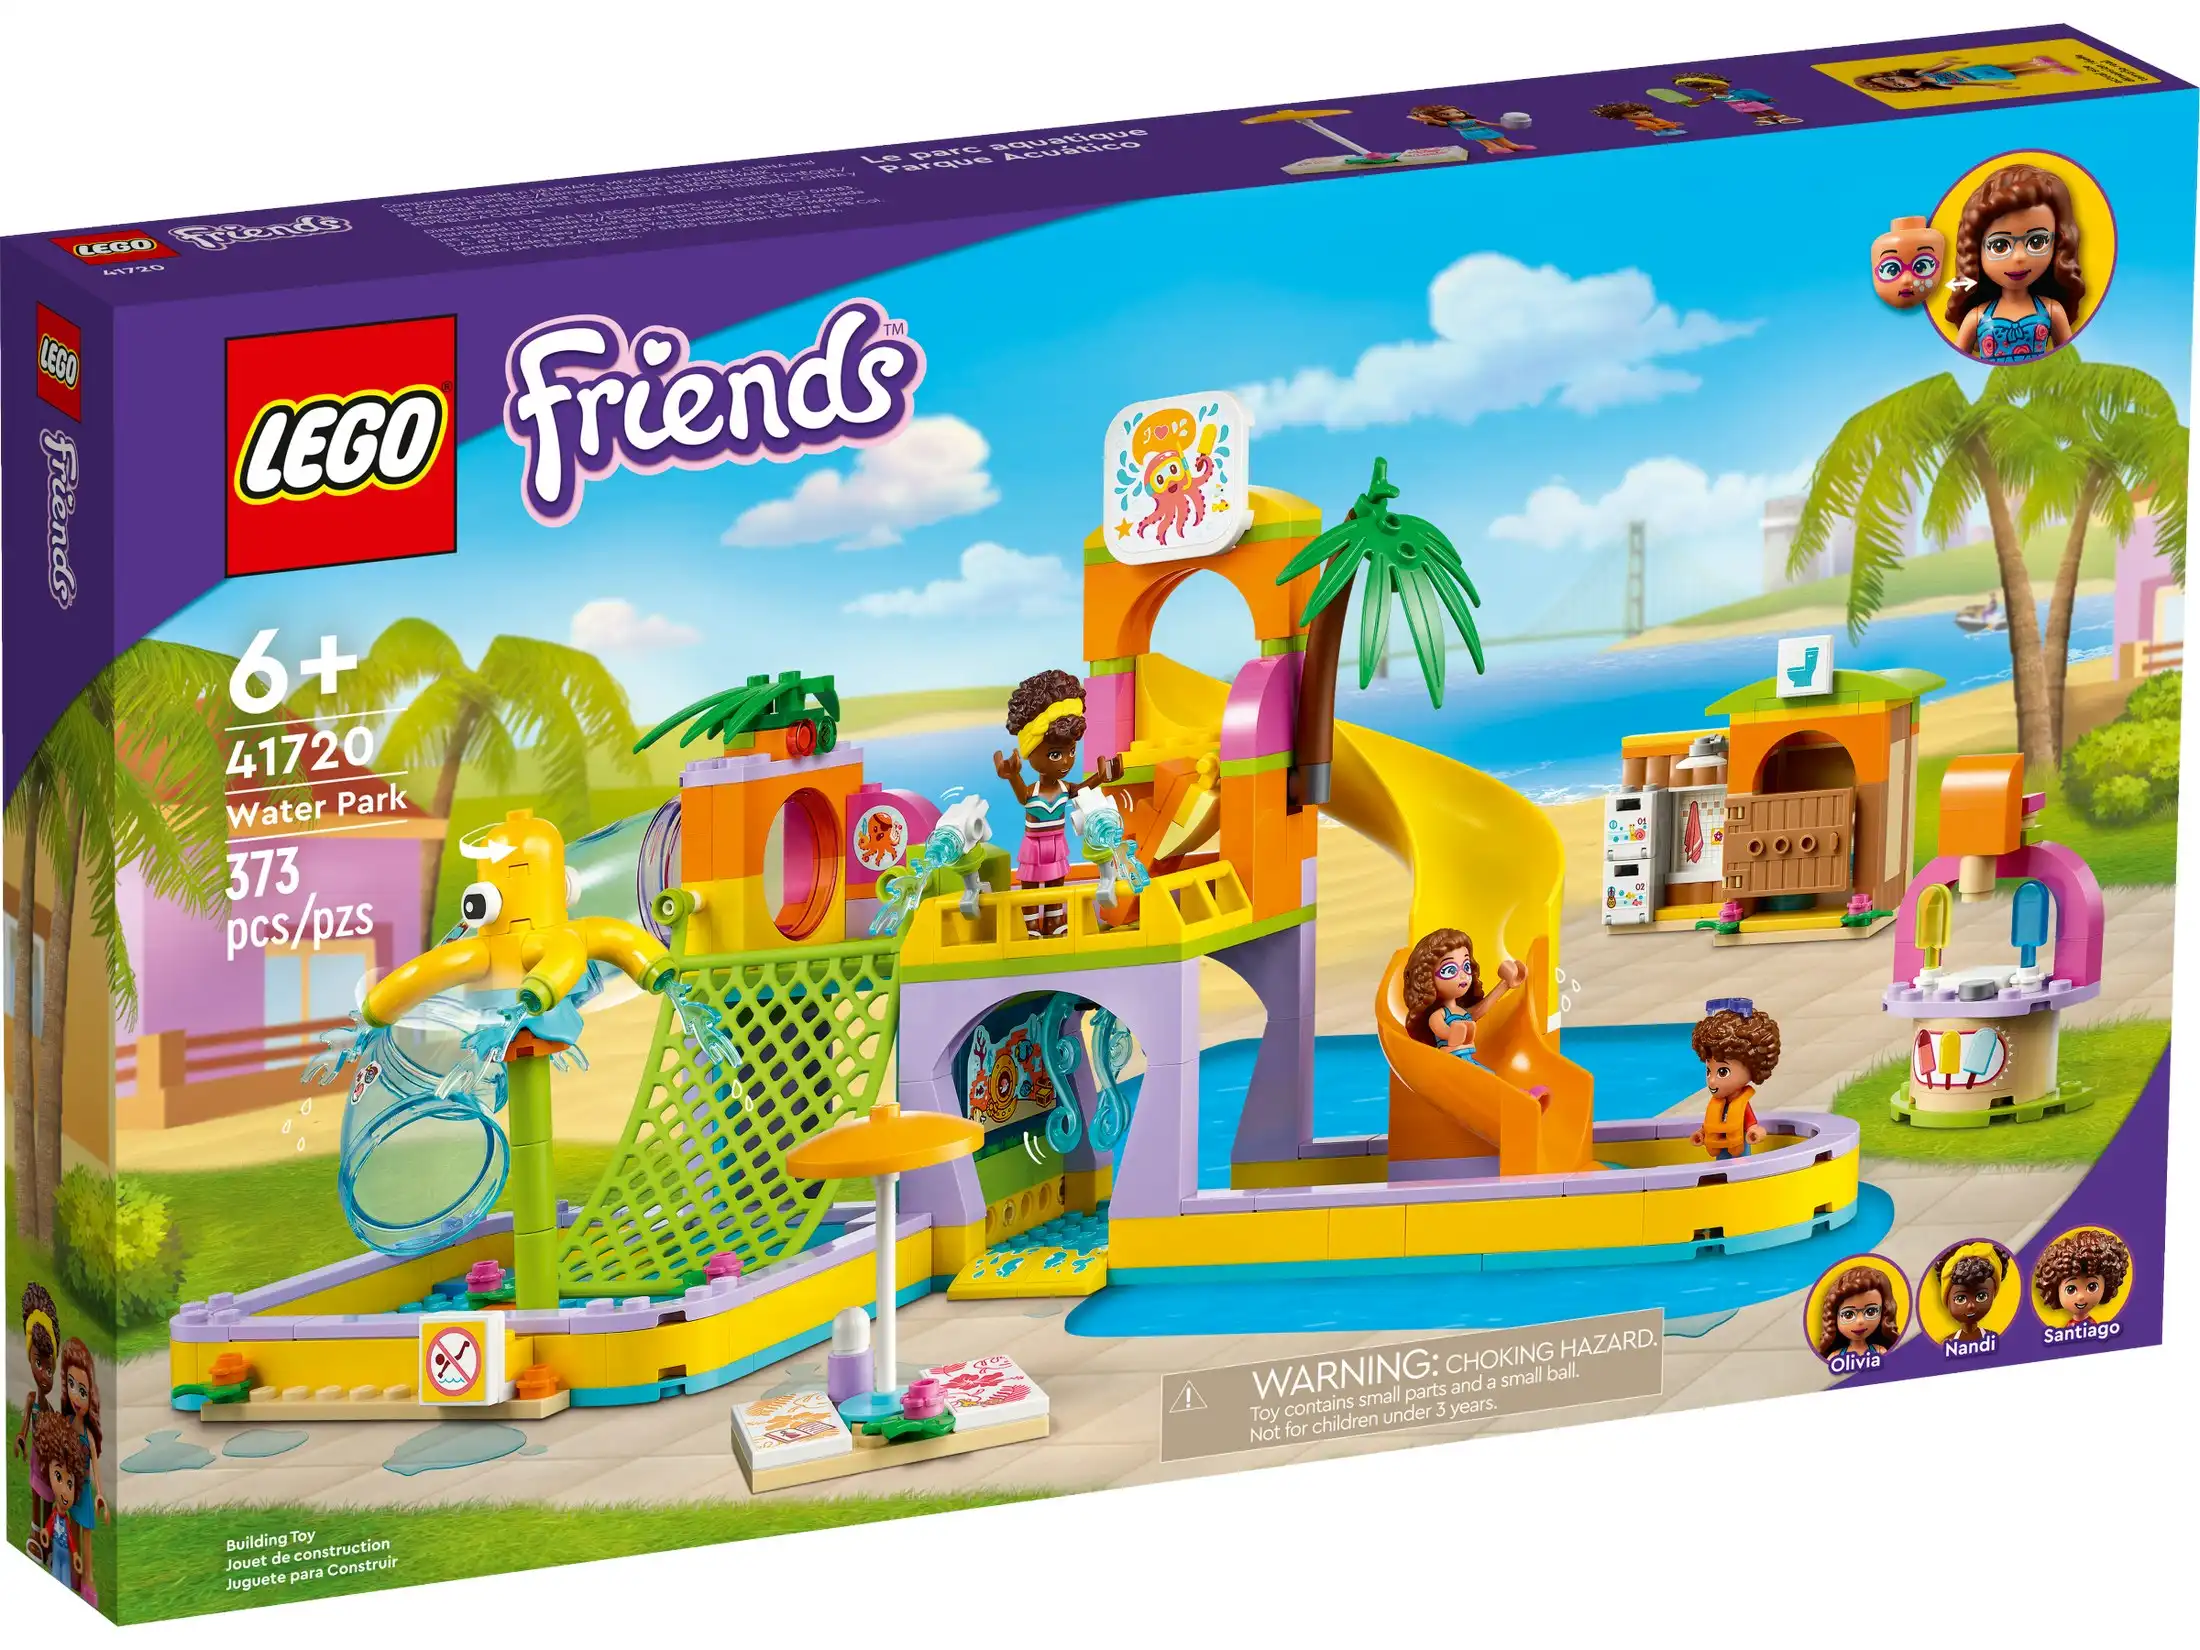 LEGO 41720 Water Park - Friends